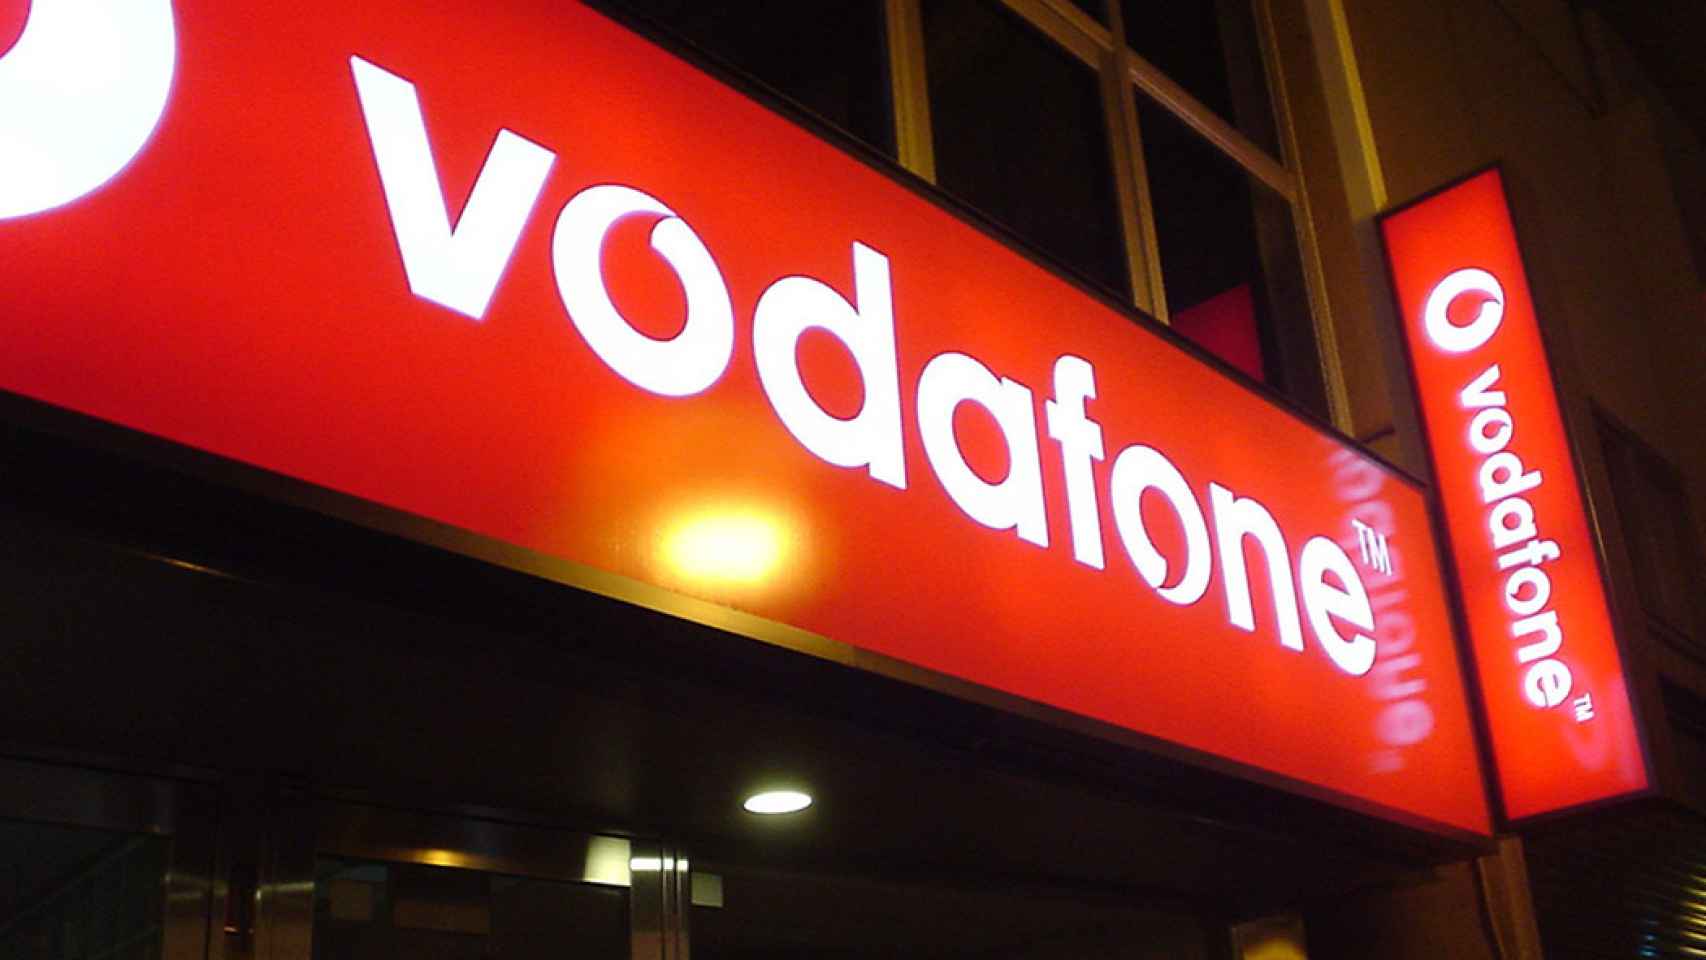 Una tienda Vodafone.